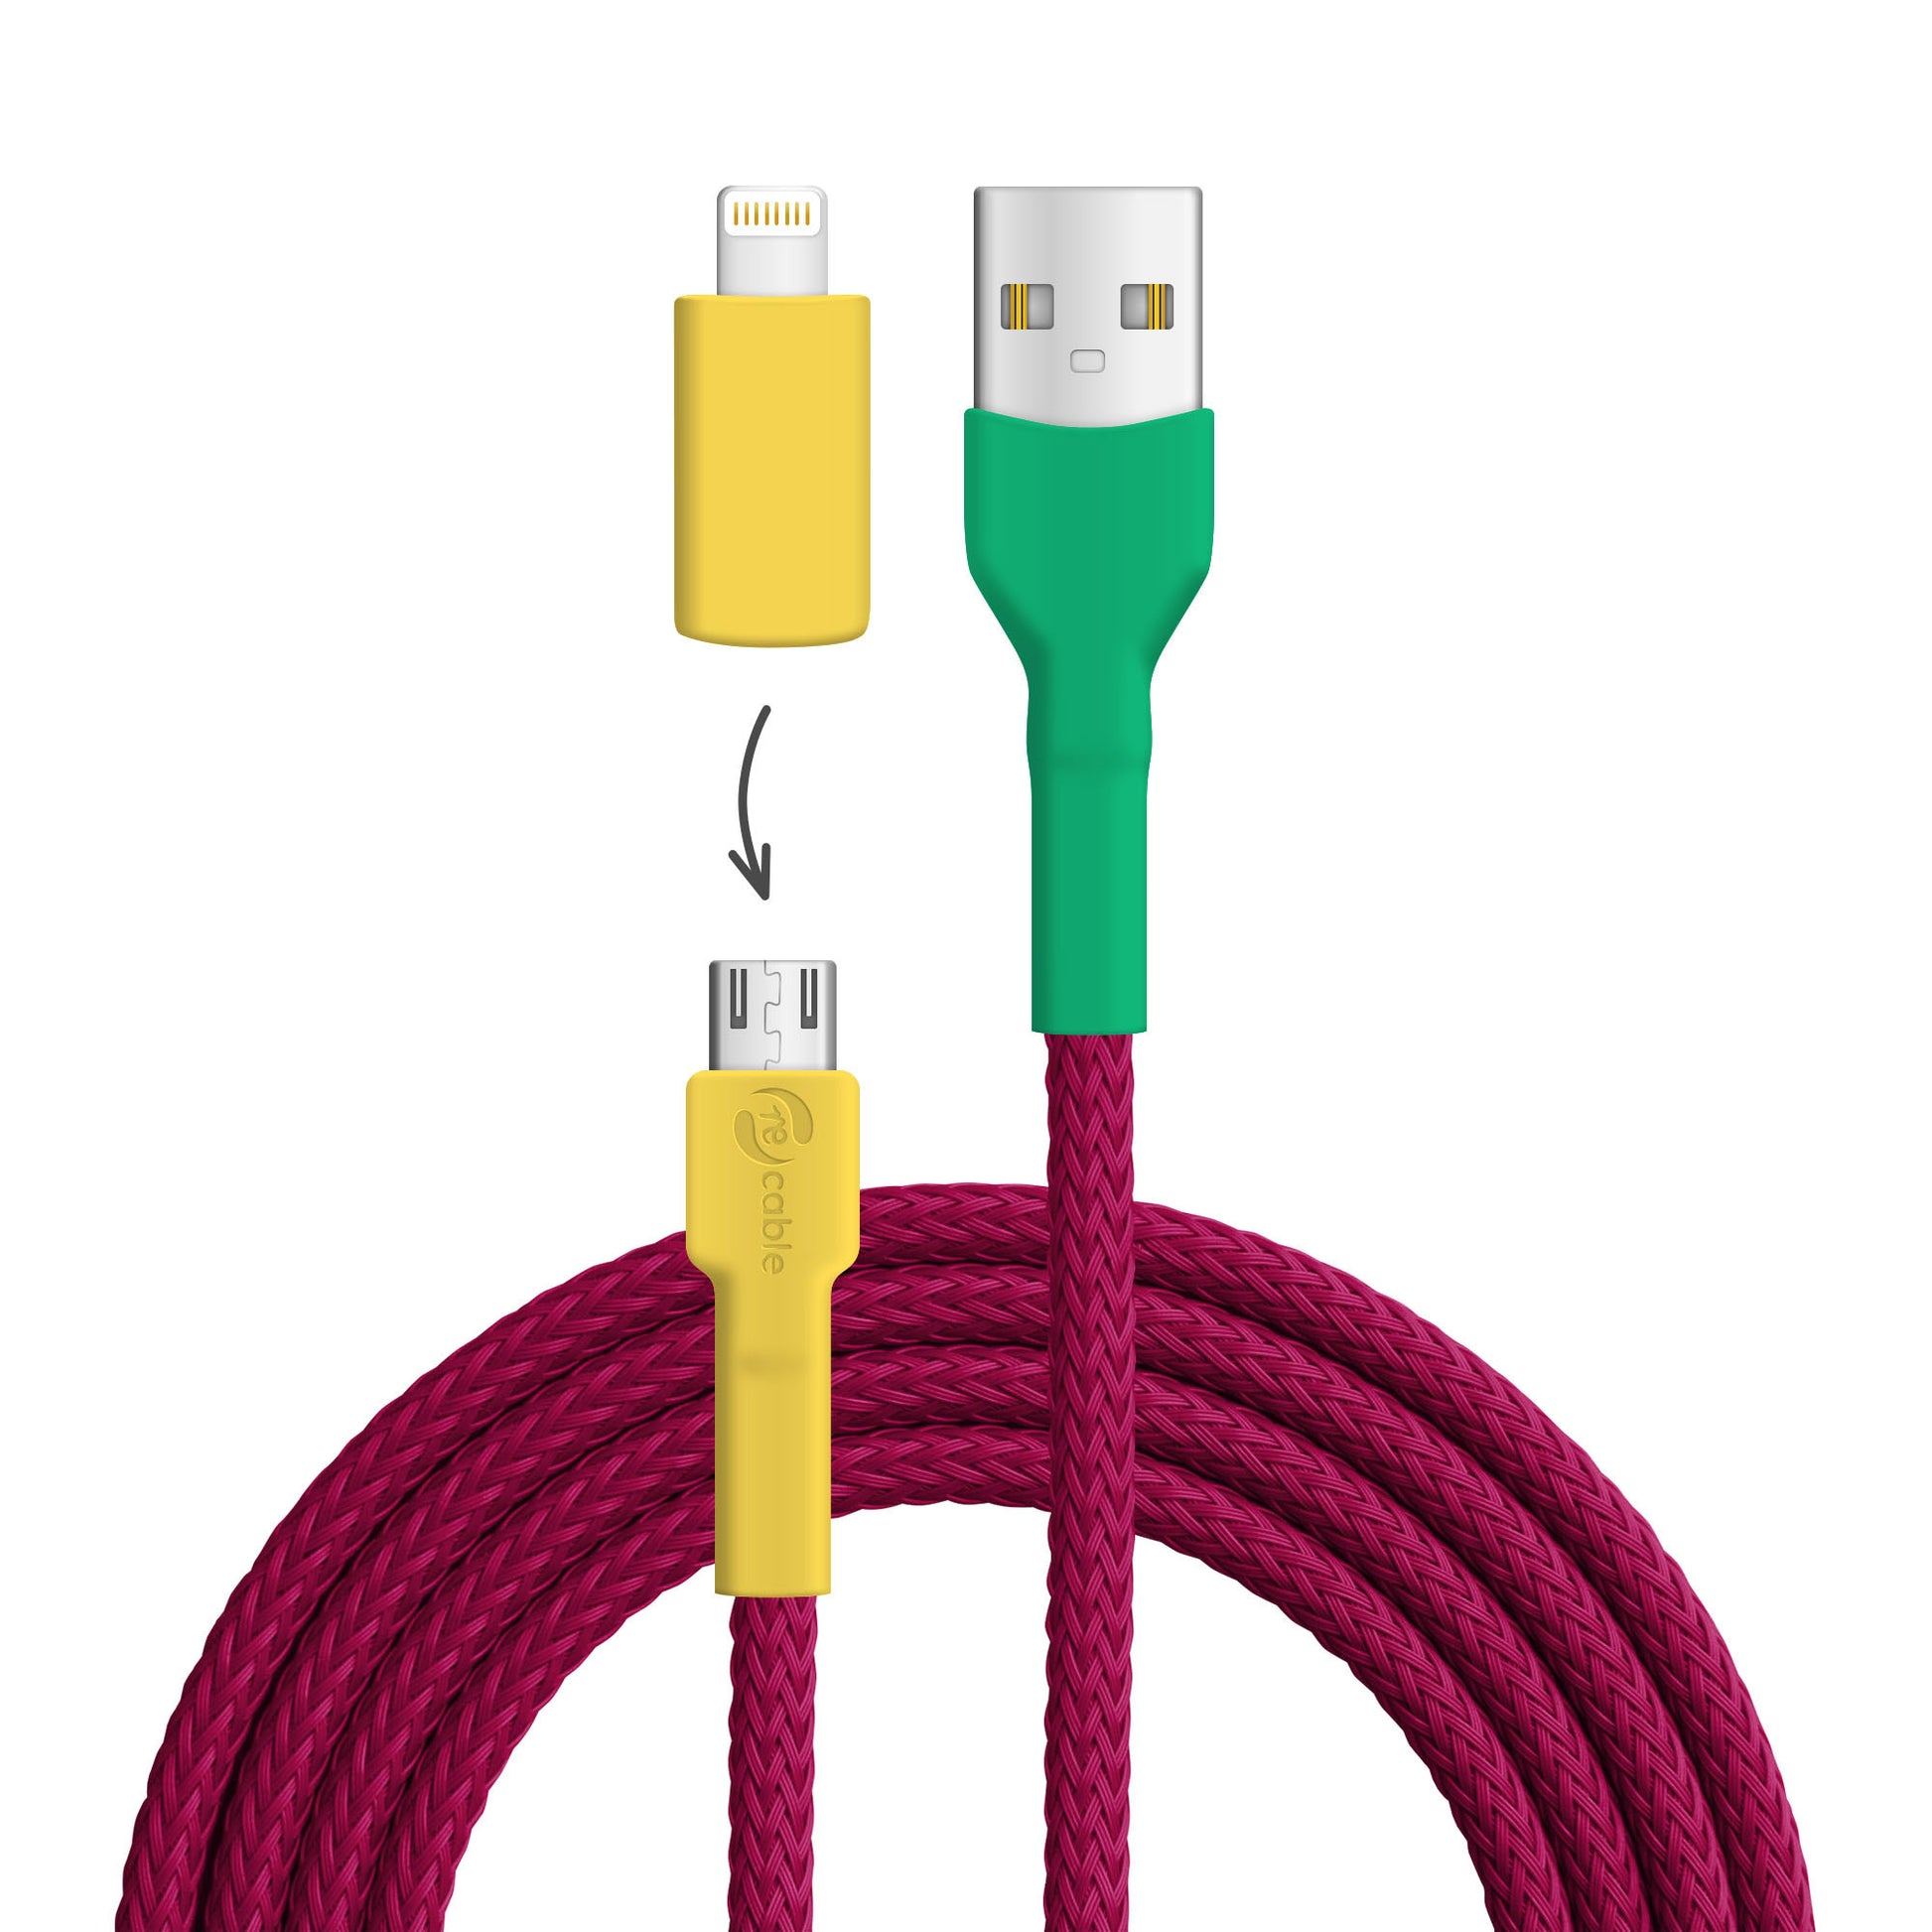 USB-Kabel, Design: Gould­amadine, Anschlüsse: USB A auf Micro-USB mit Lightning Adapter (nicht verbunden)